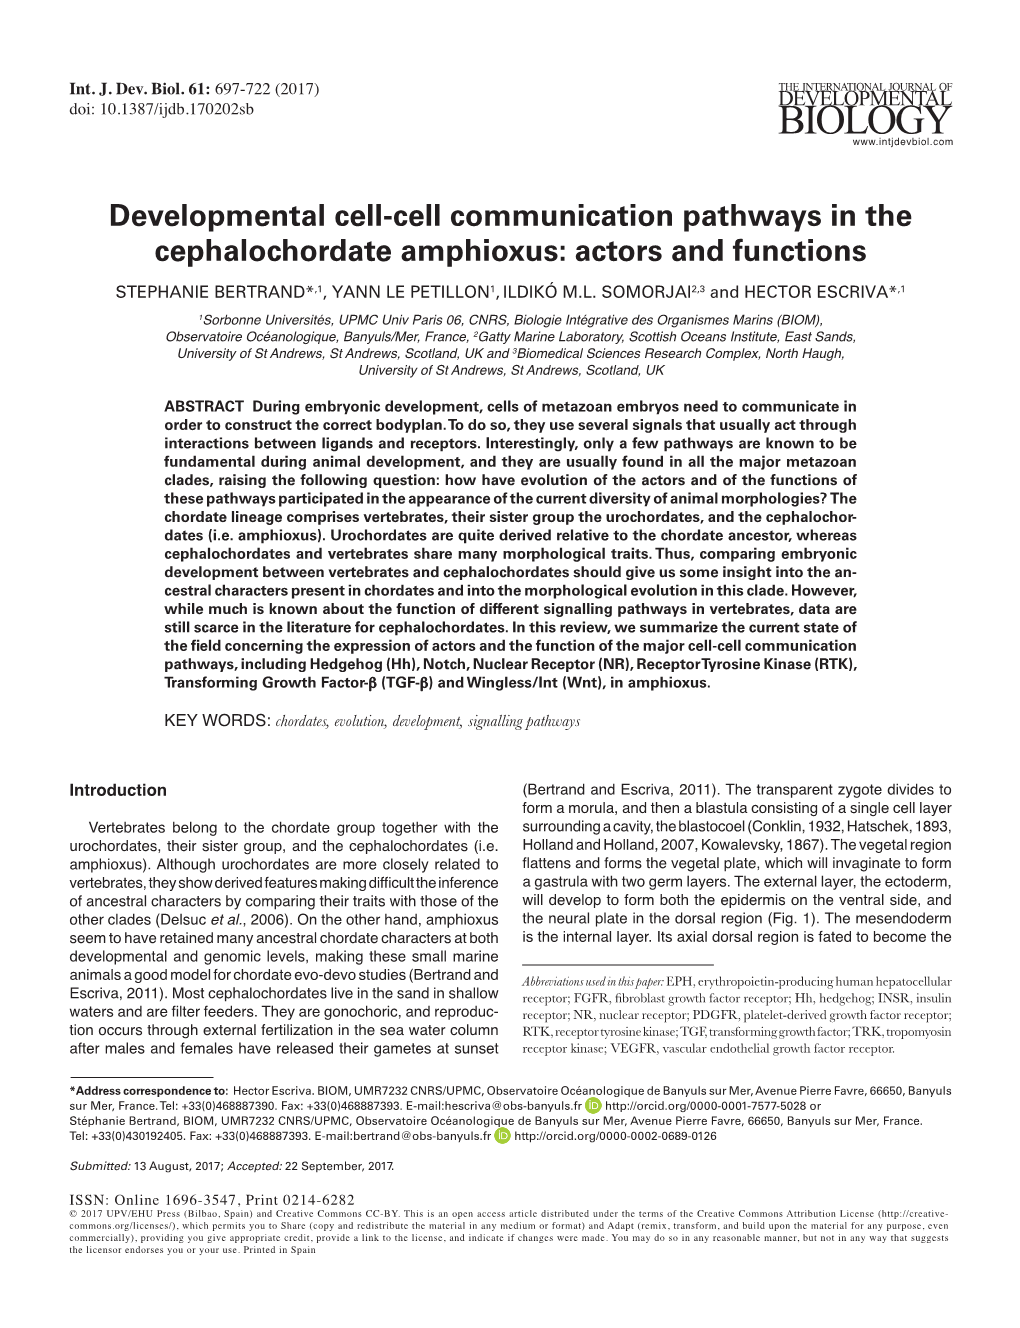 Developmental Cell-Cell Communication Pathways in the Cephalochordate Amphioxus: Actors and Functions STEPHANIE BERTRAND*,1, YANN LE PETILLON1, ILDIKÓ M.L